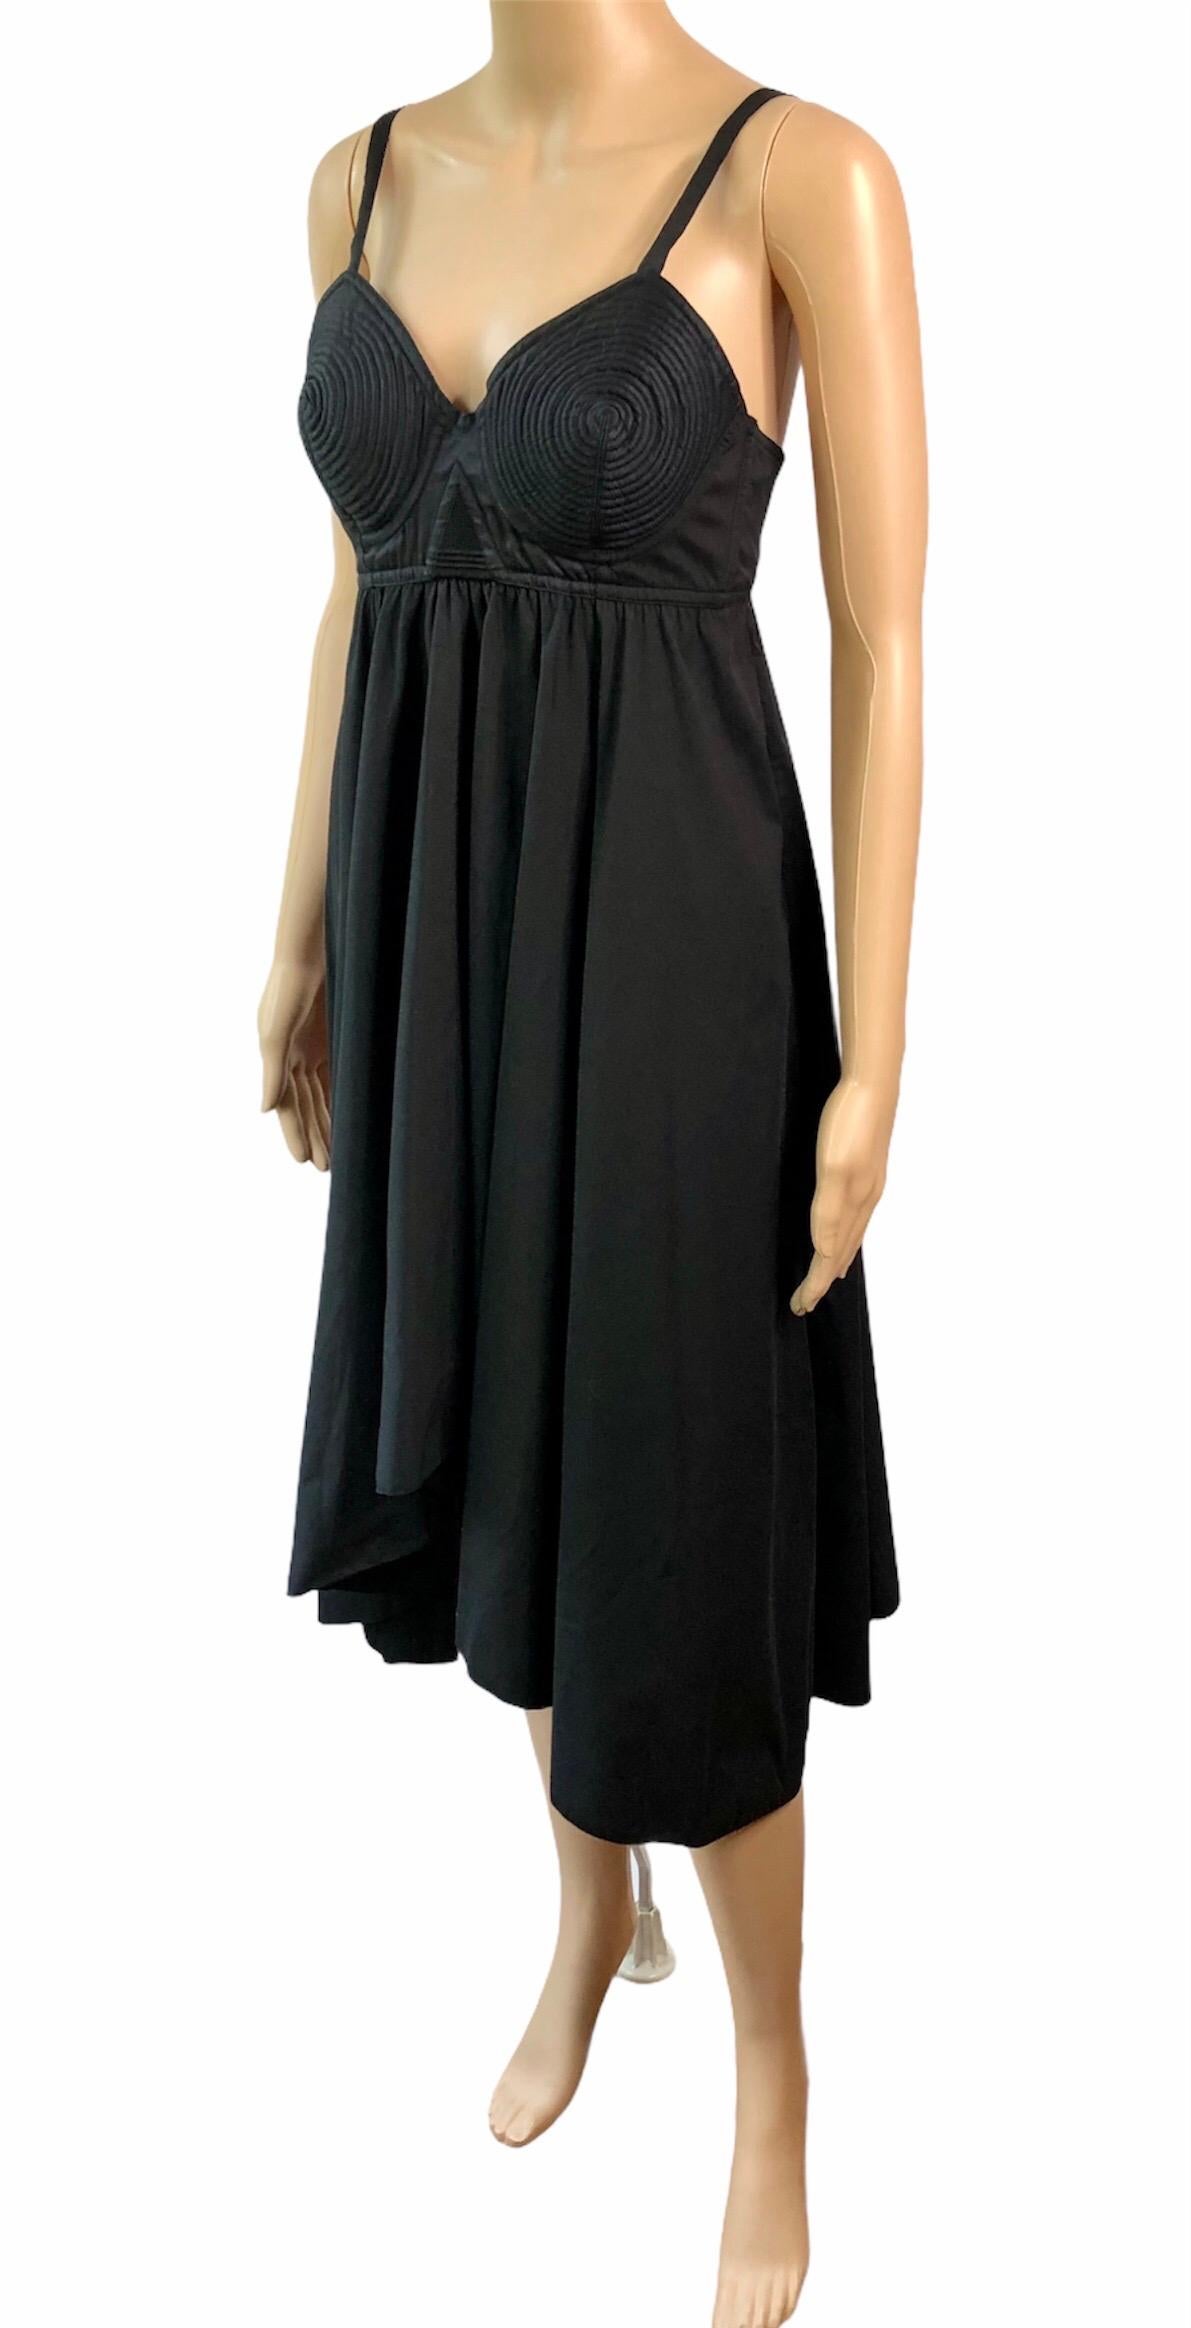 Jean Paul Gaultier Spring 2010 Cone Bra Black Dress  For Sale 1